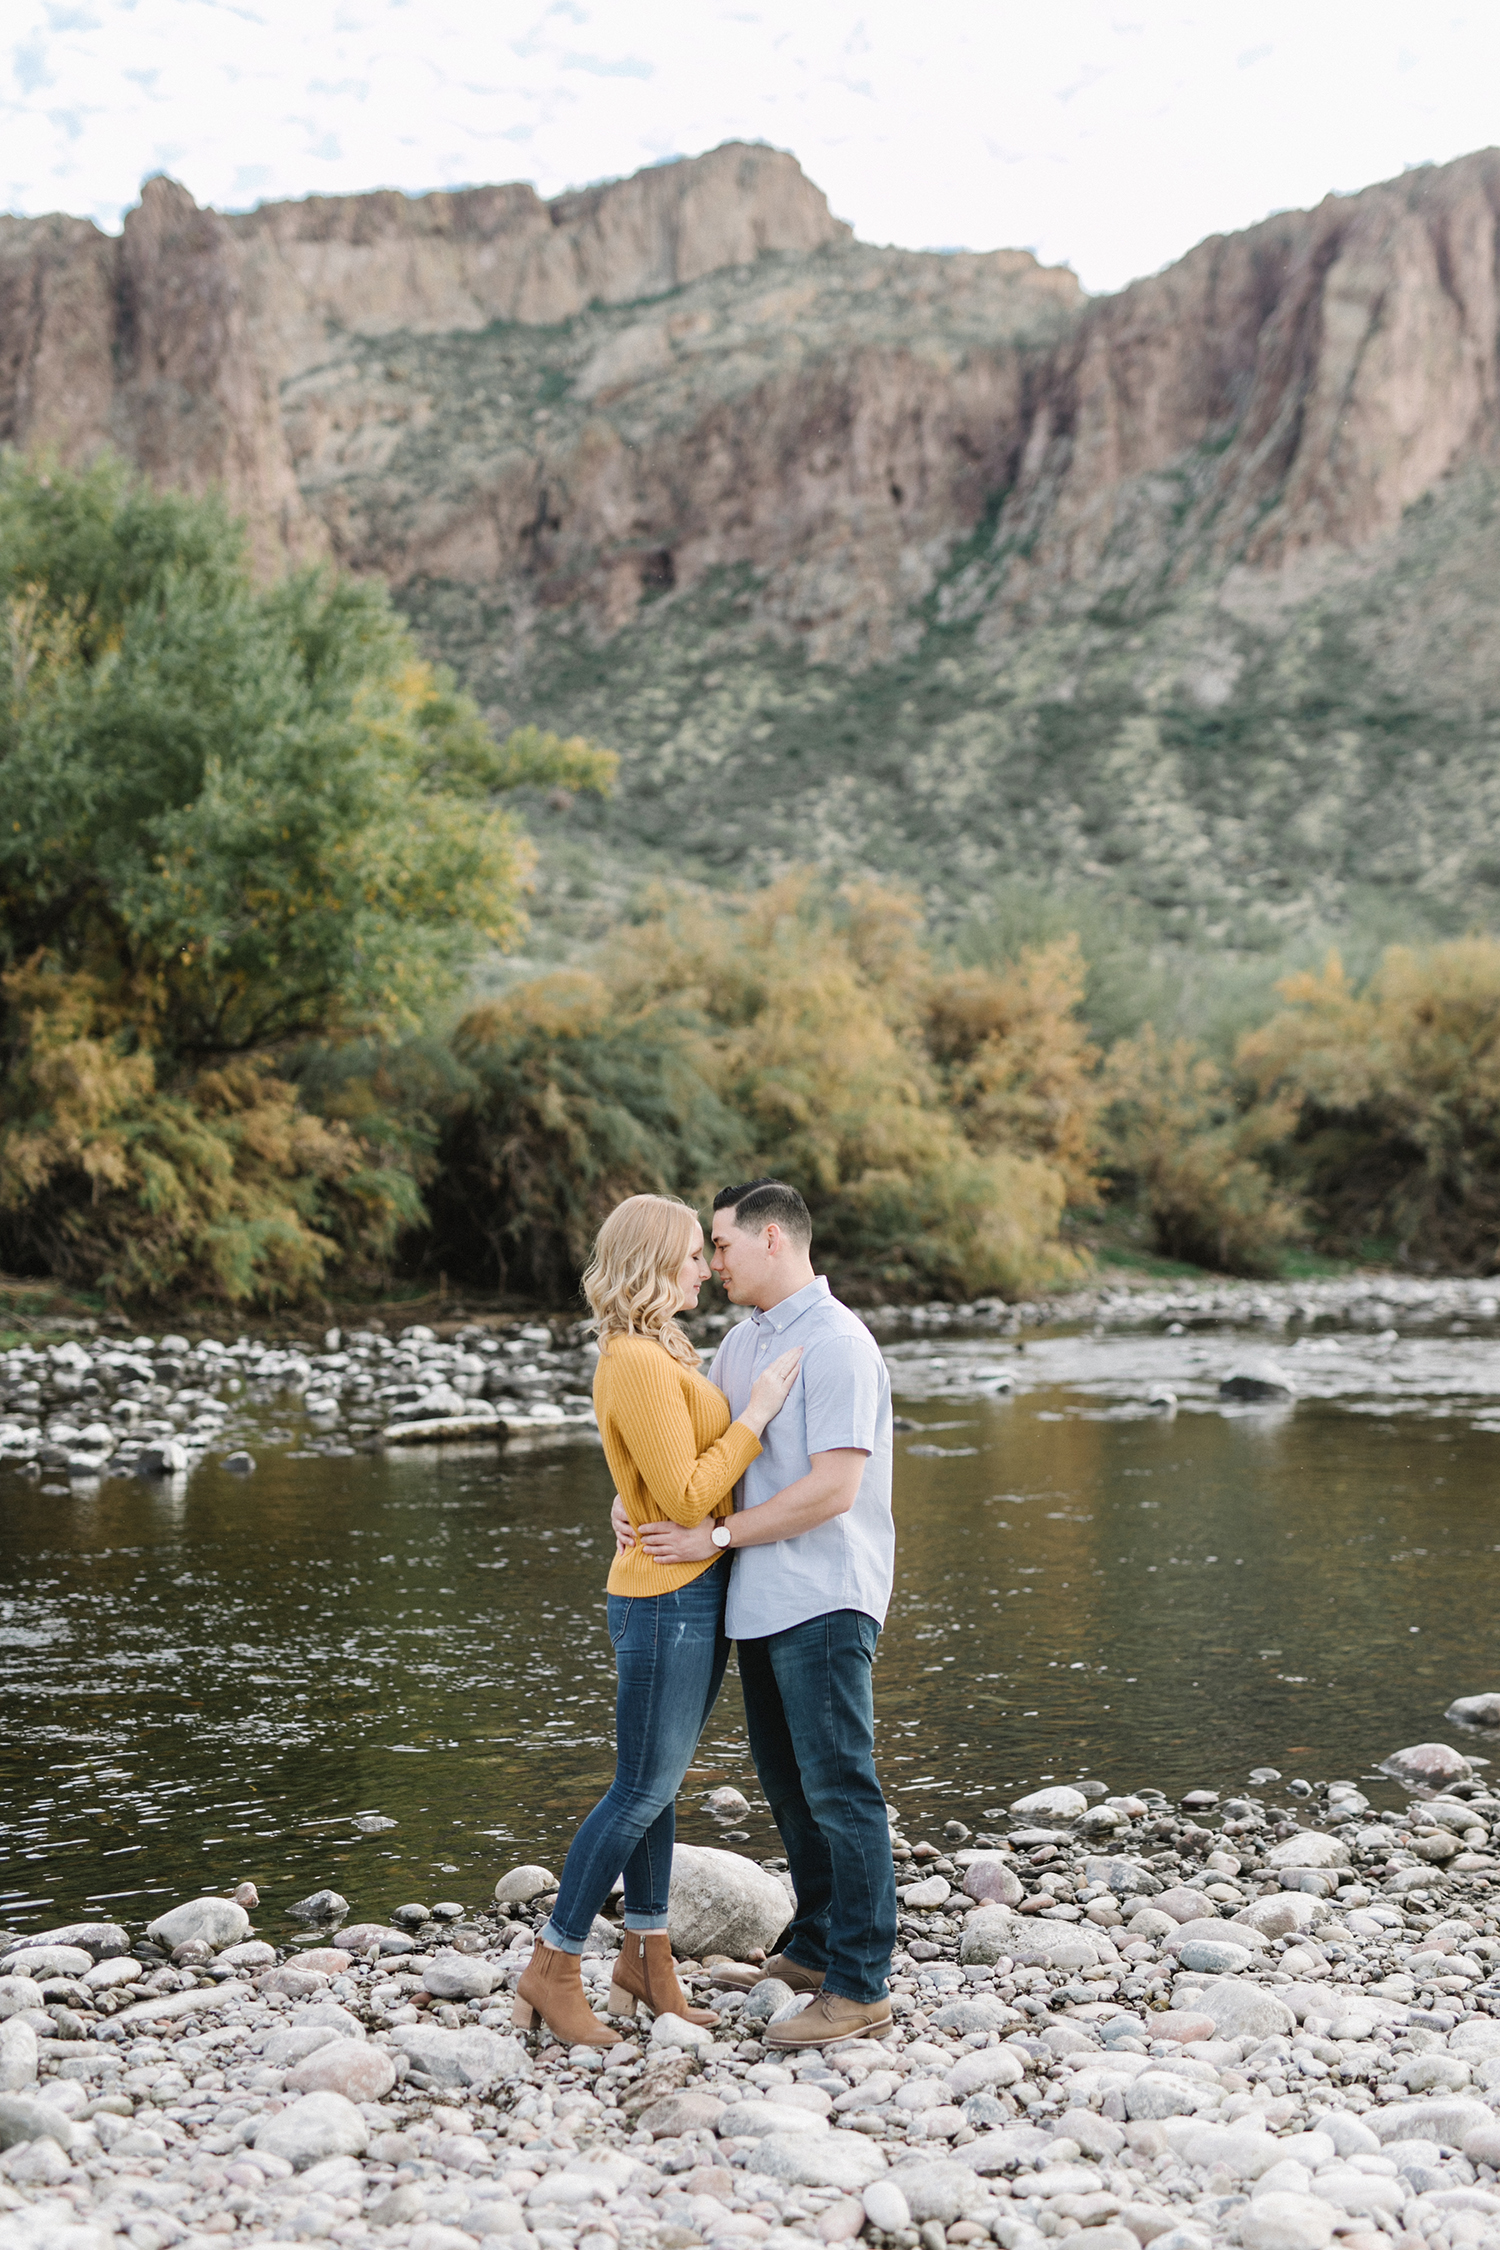 At the Salt River with Kendra & David. A beautiful Arizona desert engagement portrait shoot. View more at KatinaPatriquin.com | #EngagementPhotos #EngagementPhotoIdeas #EngagementPhotoShoot #EngagementPhotoOutfits #EngagementPhotoPoses #ArizonaWedding #ArizonaWeddingIdeas #SaltRiver #ArizonaSaltRiver  #ArizonaWeddingPhotography #WeddingIdeas #DesertPhotoShoot #ArizonaDesert #DesertLandscape #EngagementPortraits #ArizonaPhotographer #ArizonaPhotography